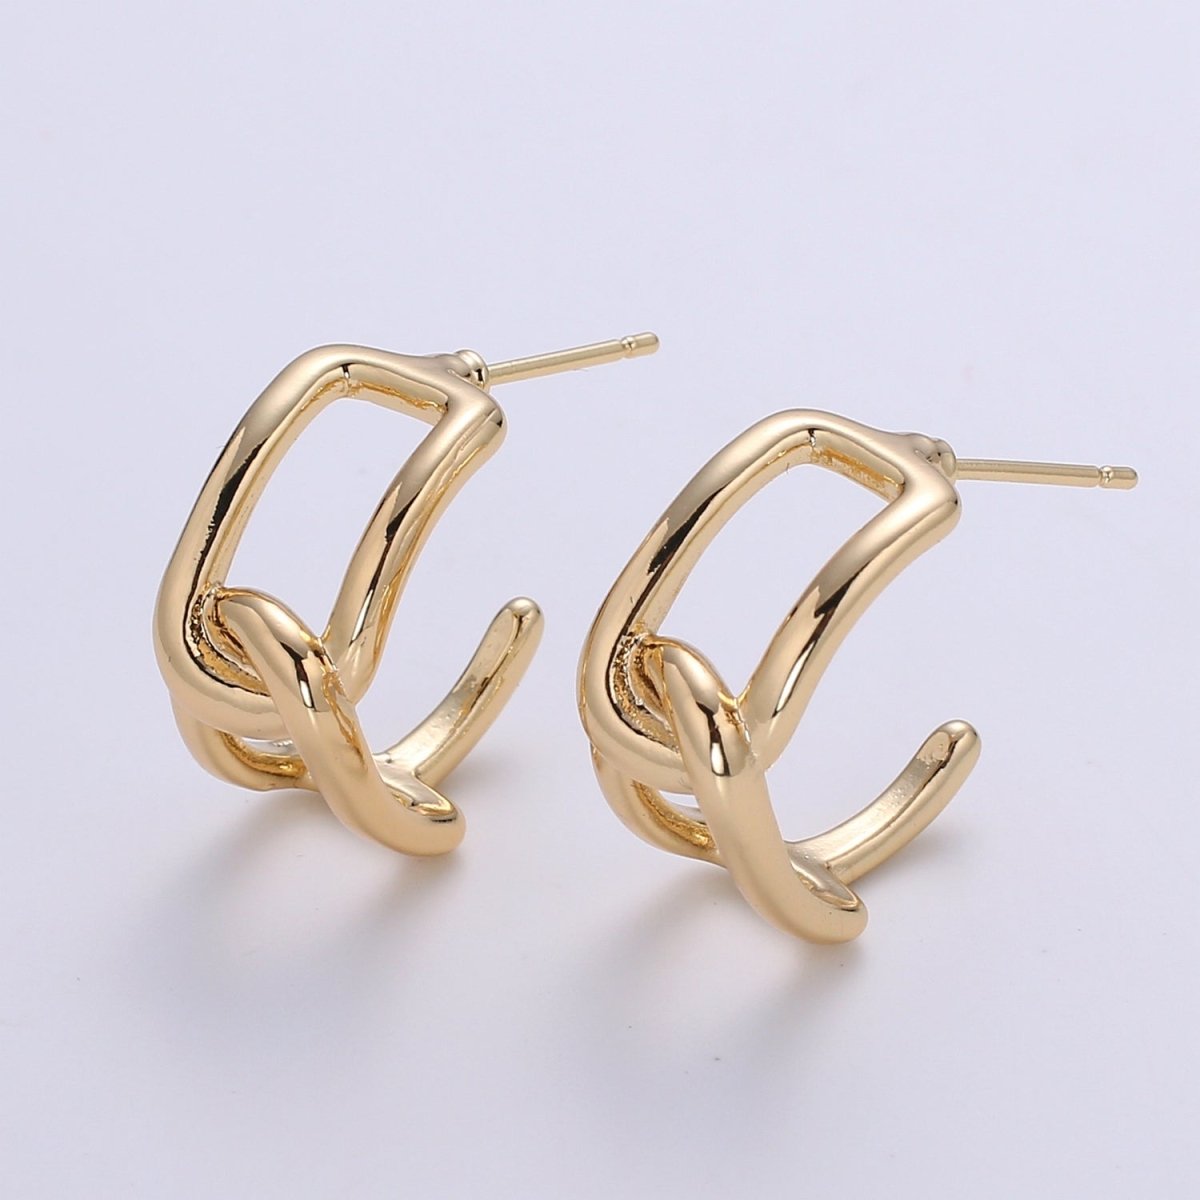 OS Golden Tangled Square Studs Earring Plain Gold Tangled Geometric Shapes Earring Jewelry GP-1025 - DLUXCA